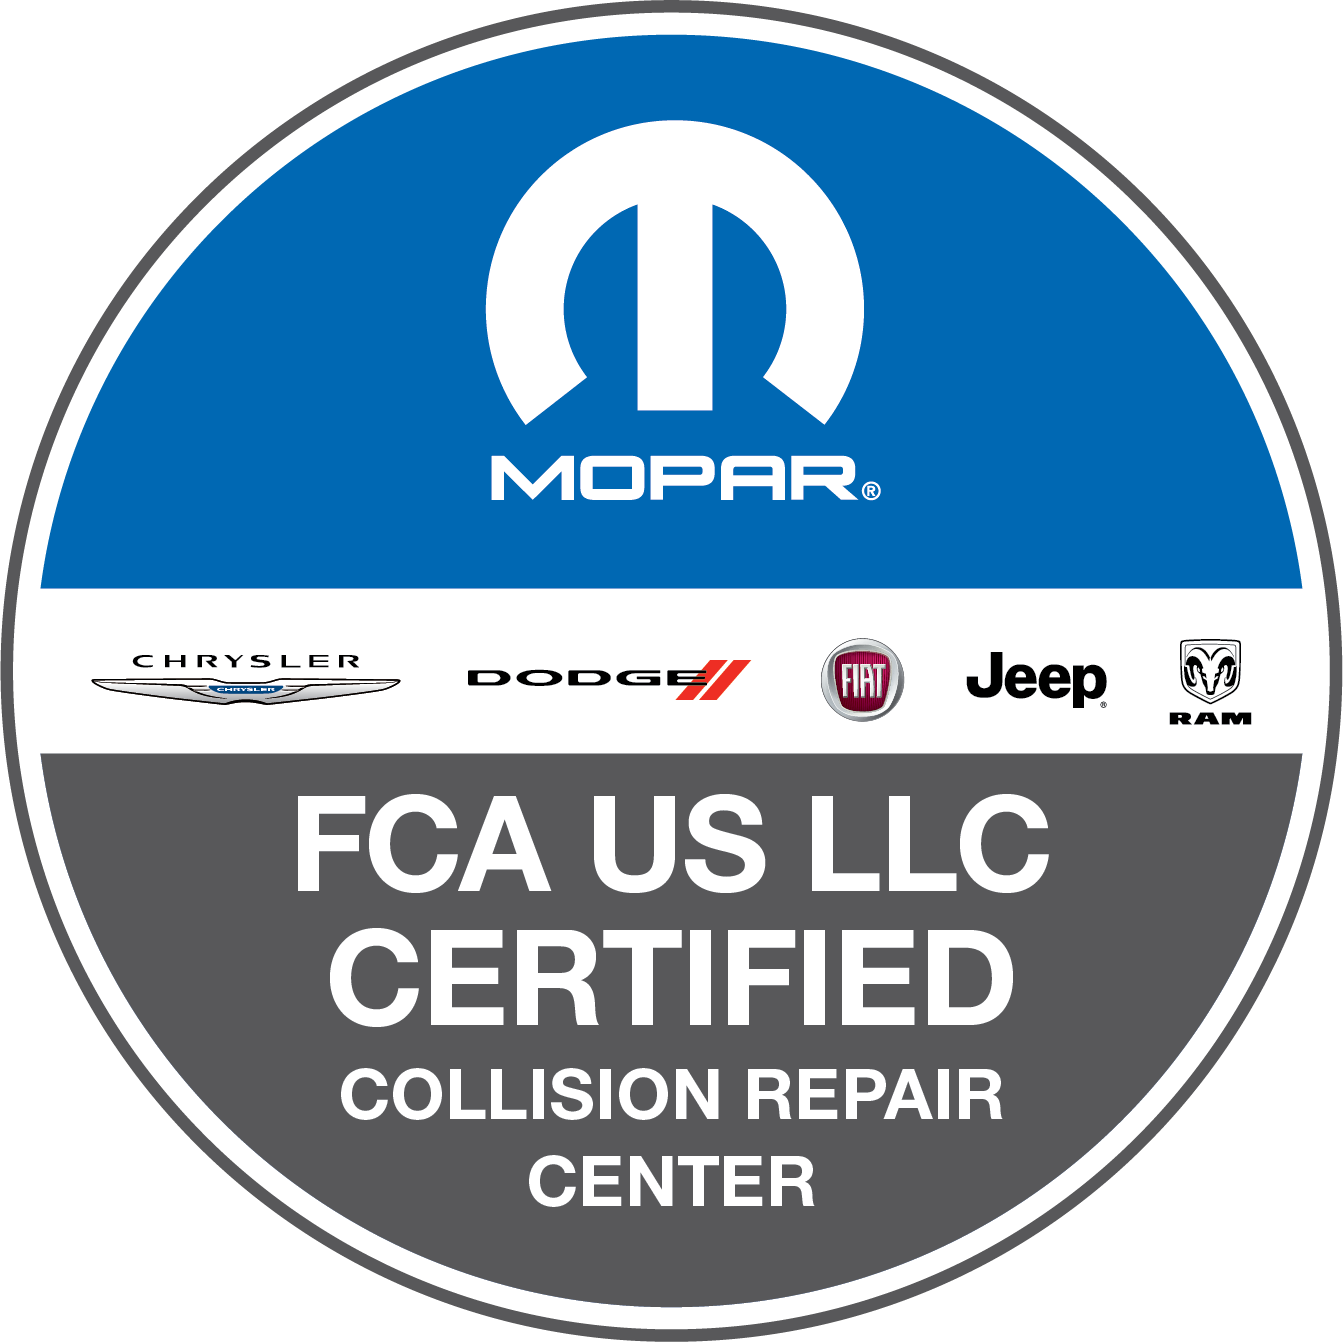 Century 1st FCA US LLC Certified Collision Repair certification